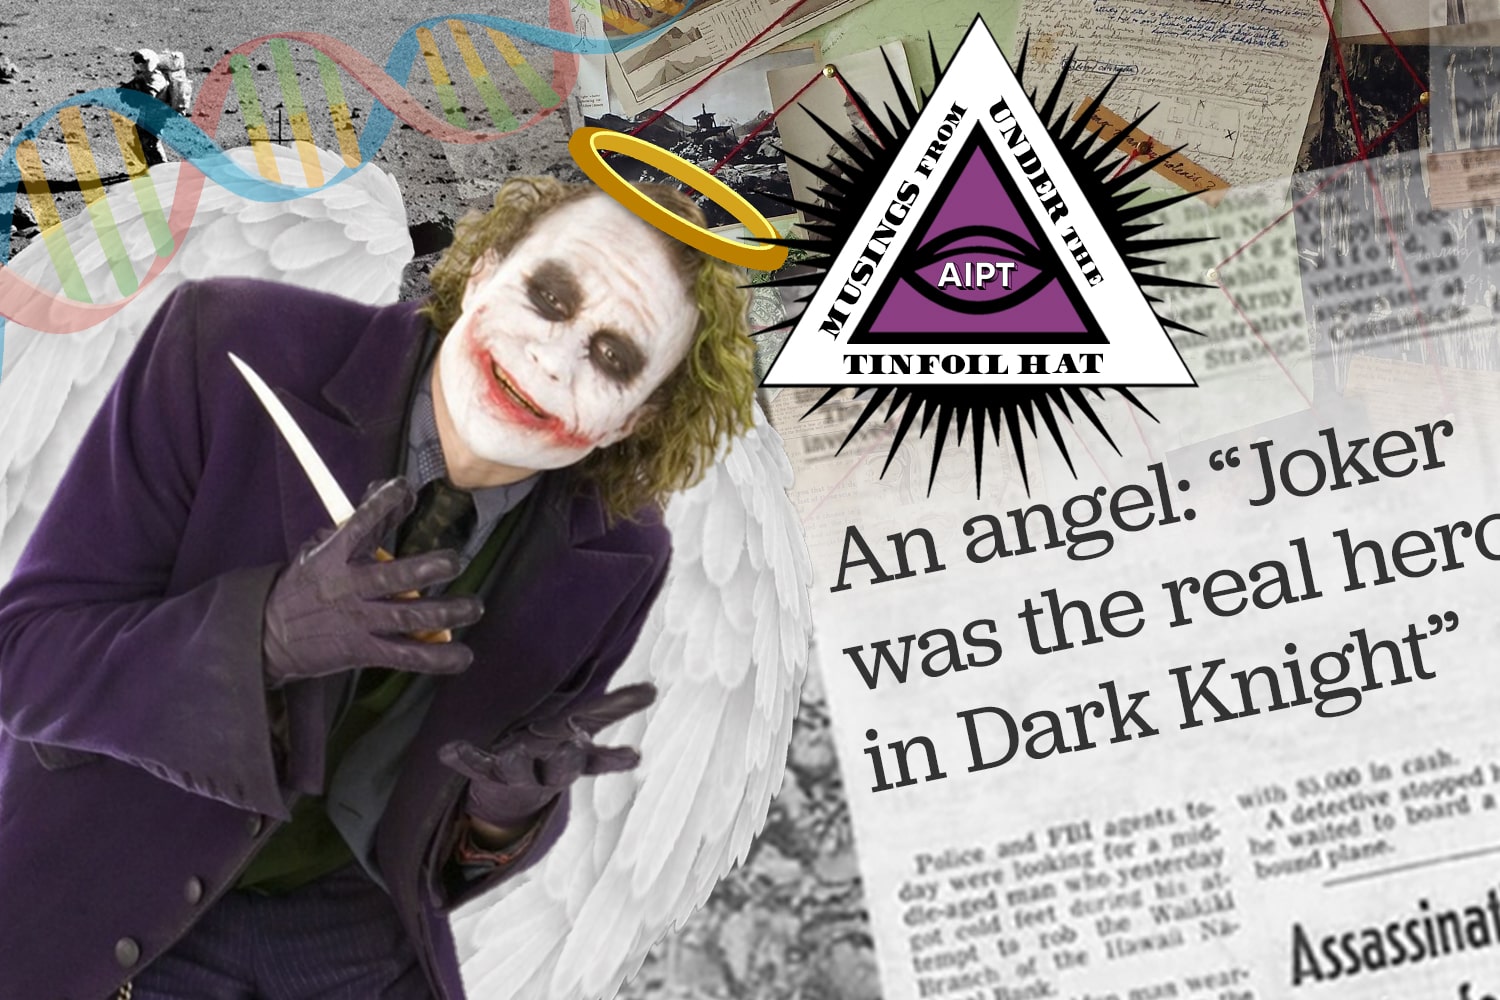 Joker was the real hero in 'The Dark Knight'